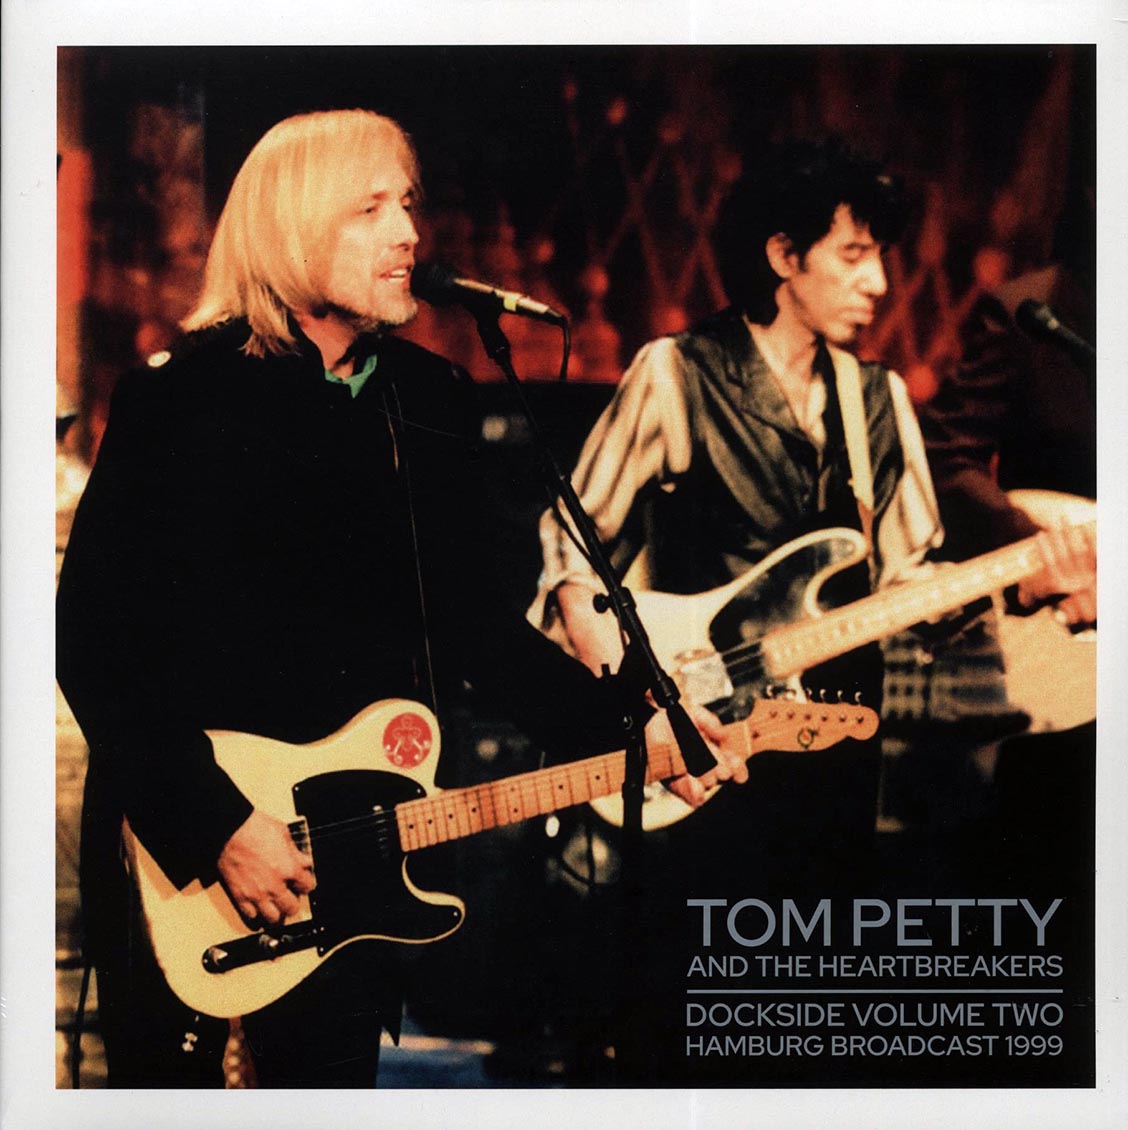 Tom Petty & The Heartbreakers - Dockside Volume 2: Hamburg Broadcast 1999